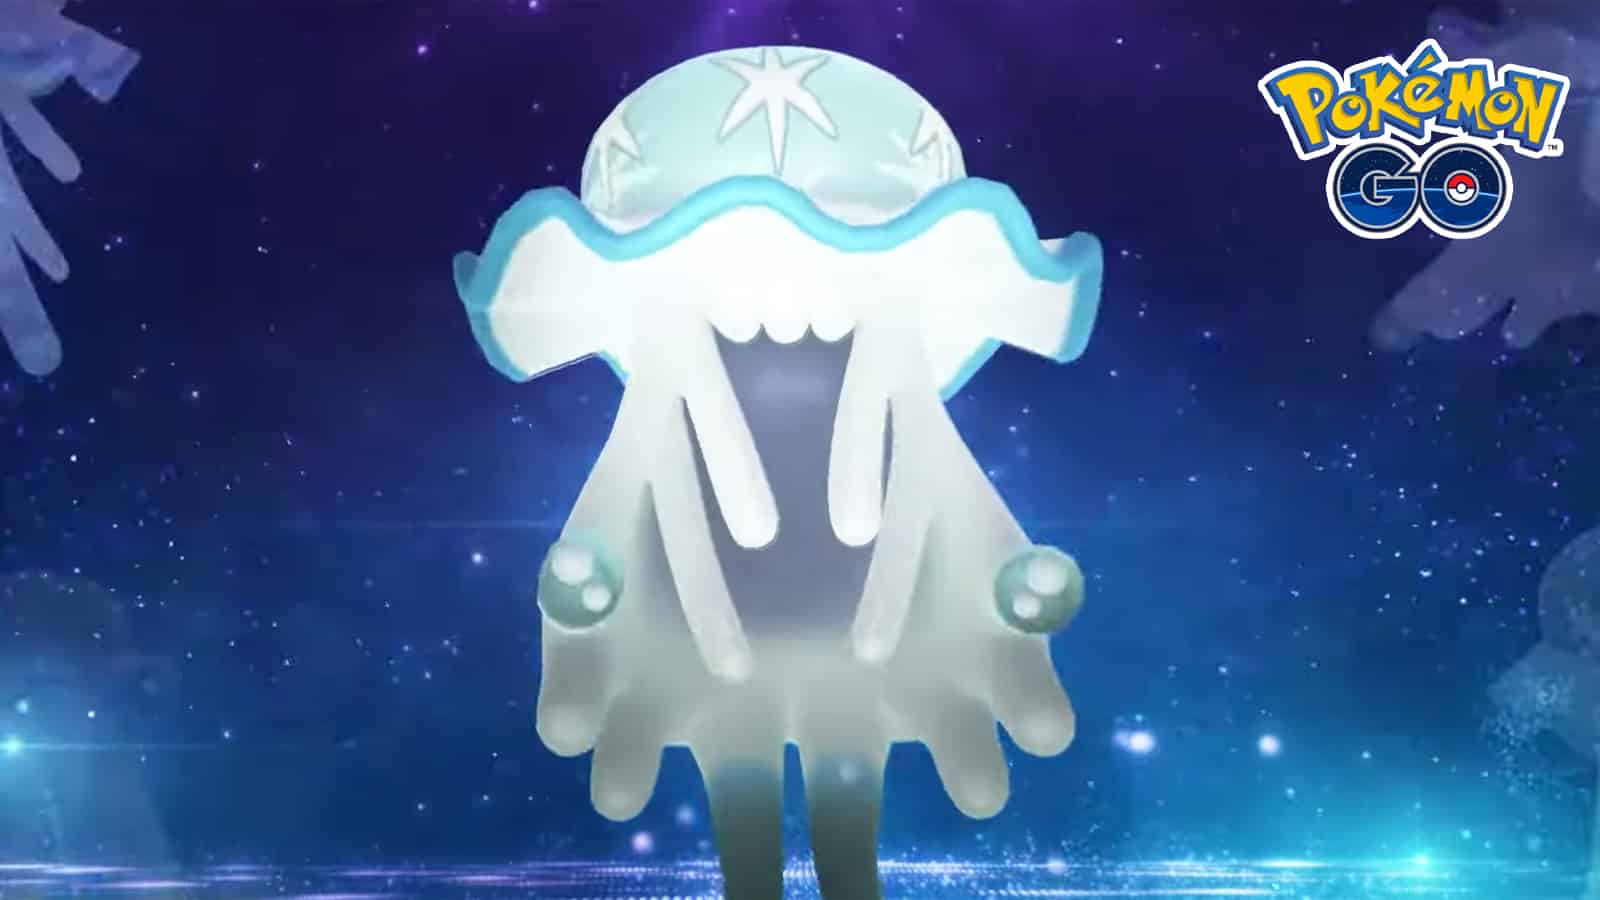 Shiny Nihilego (Instant Registered or 30 days Ultra Friends) - Pokémon Go